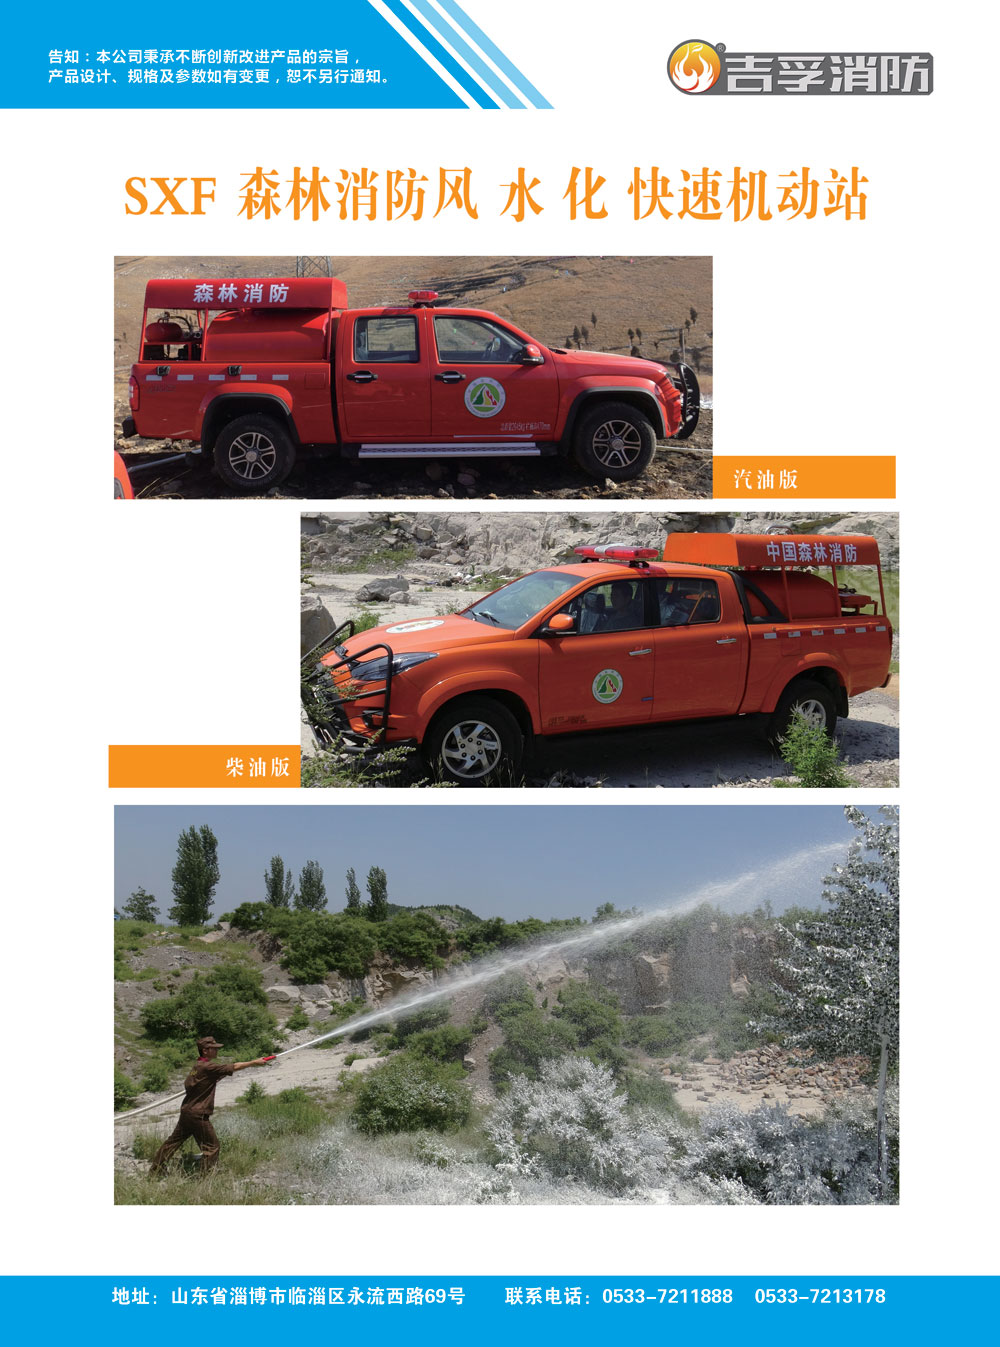 SXF-森林消防风-水-化-快速机动站2.jpg